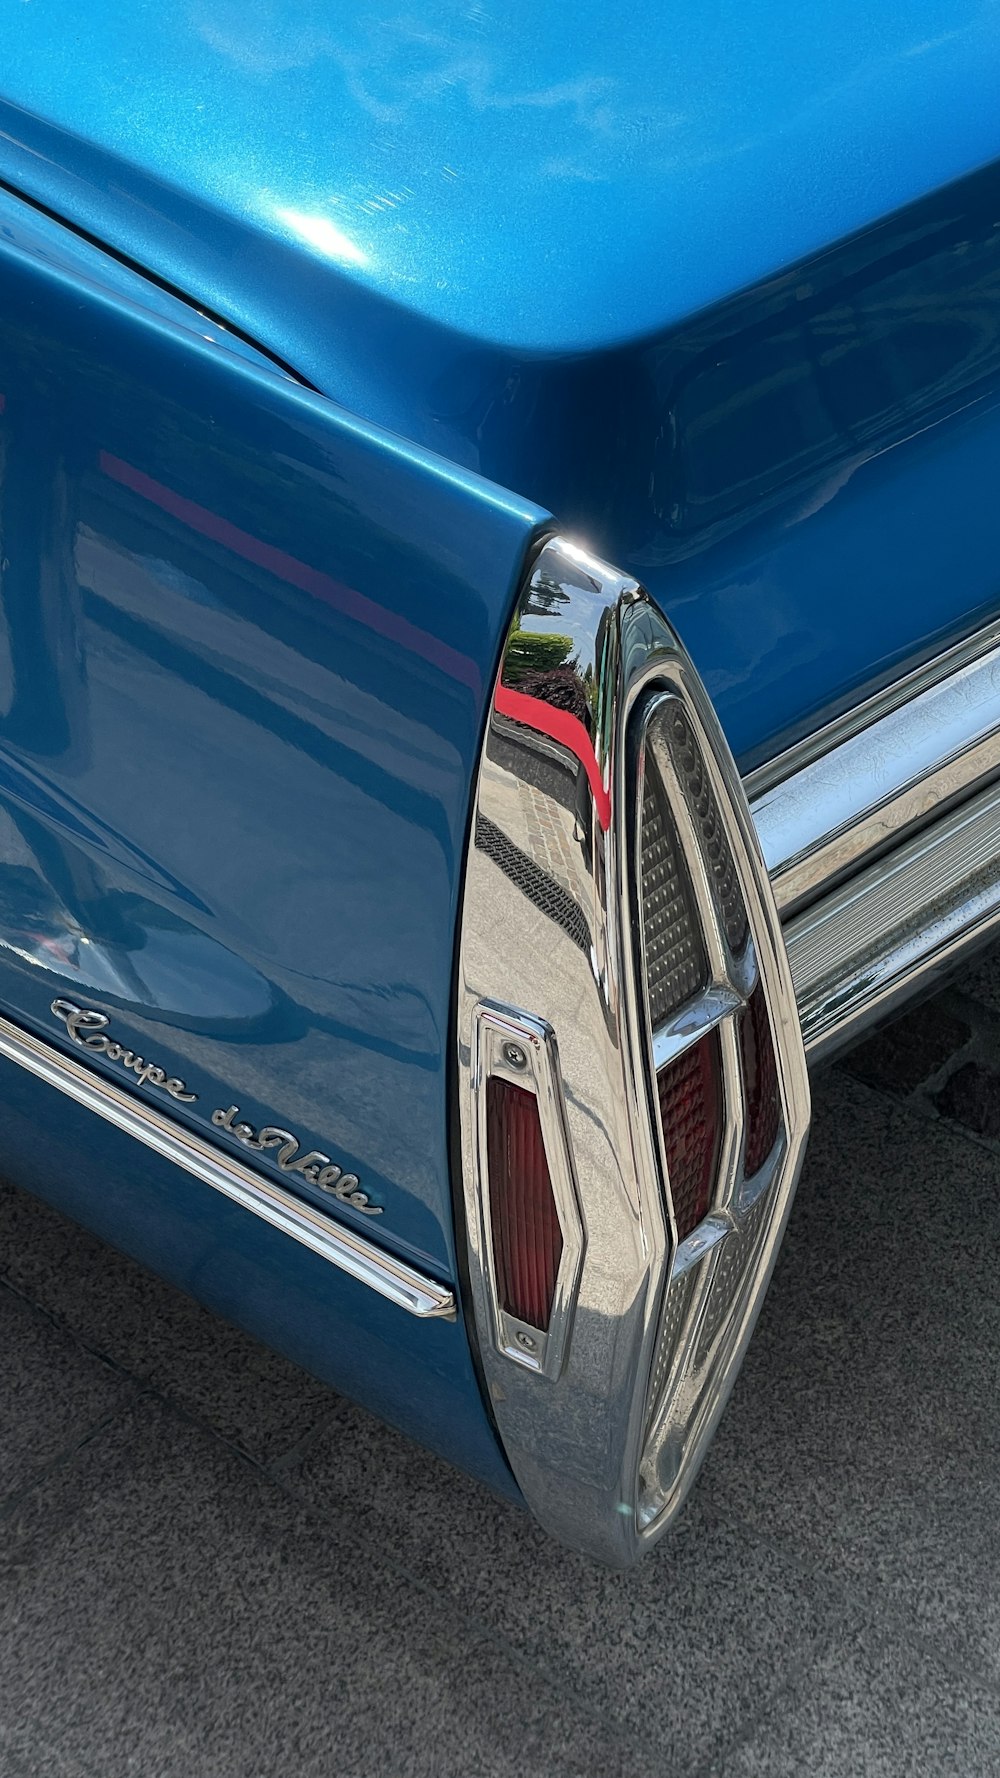 a close up of a blue car's rear end